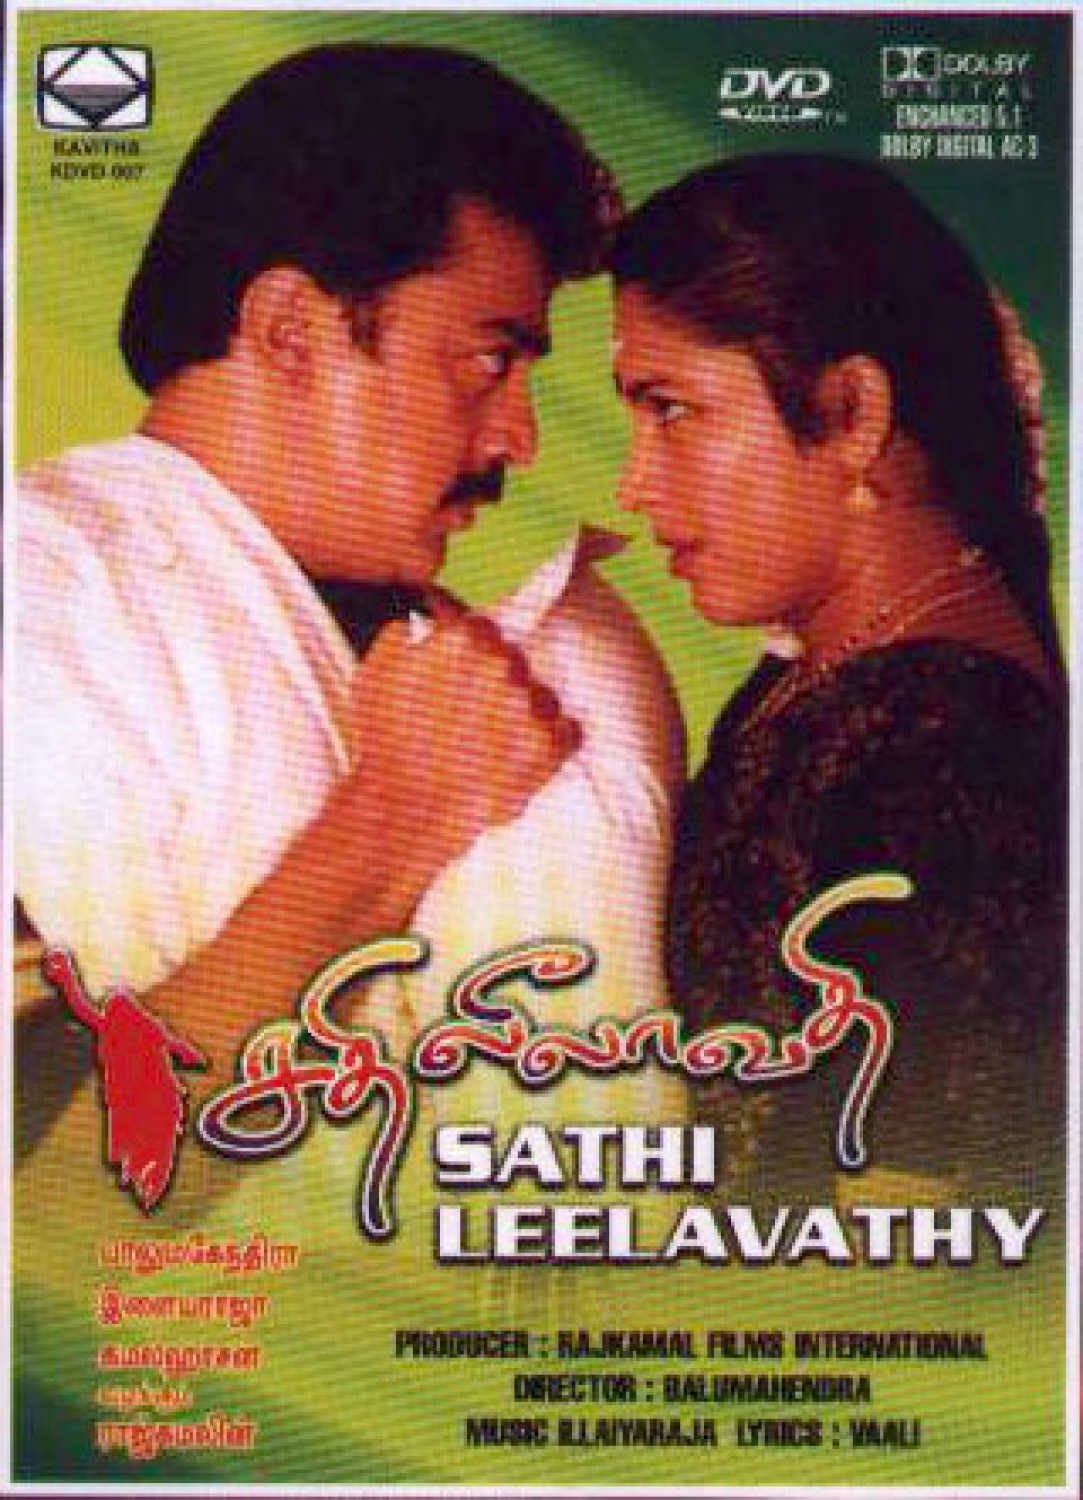 Poster for the movie "Sathi Leelavathi"